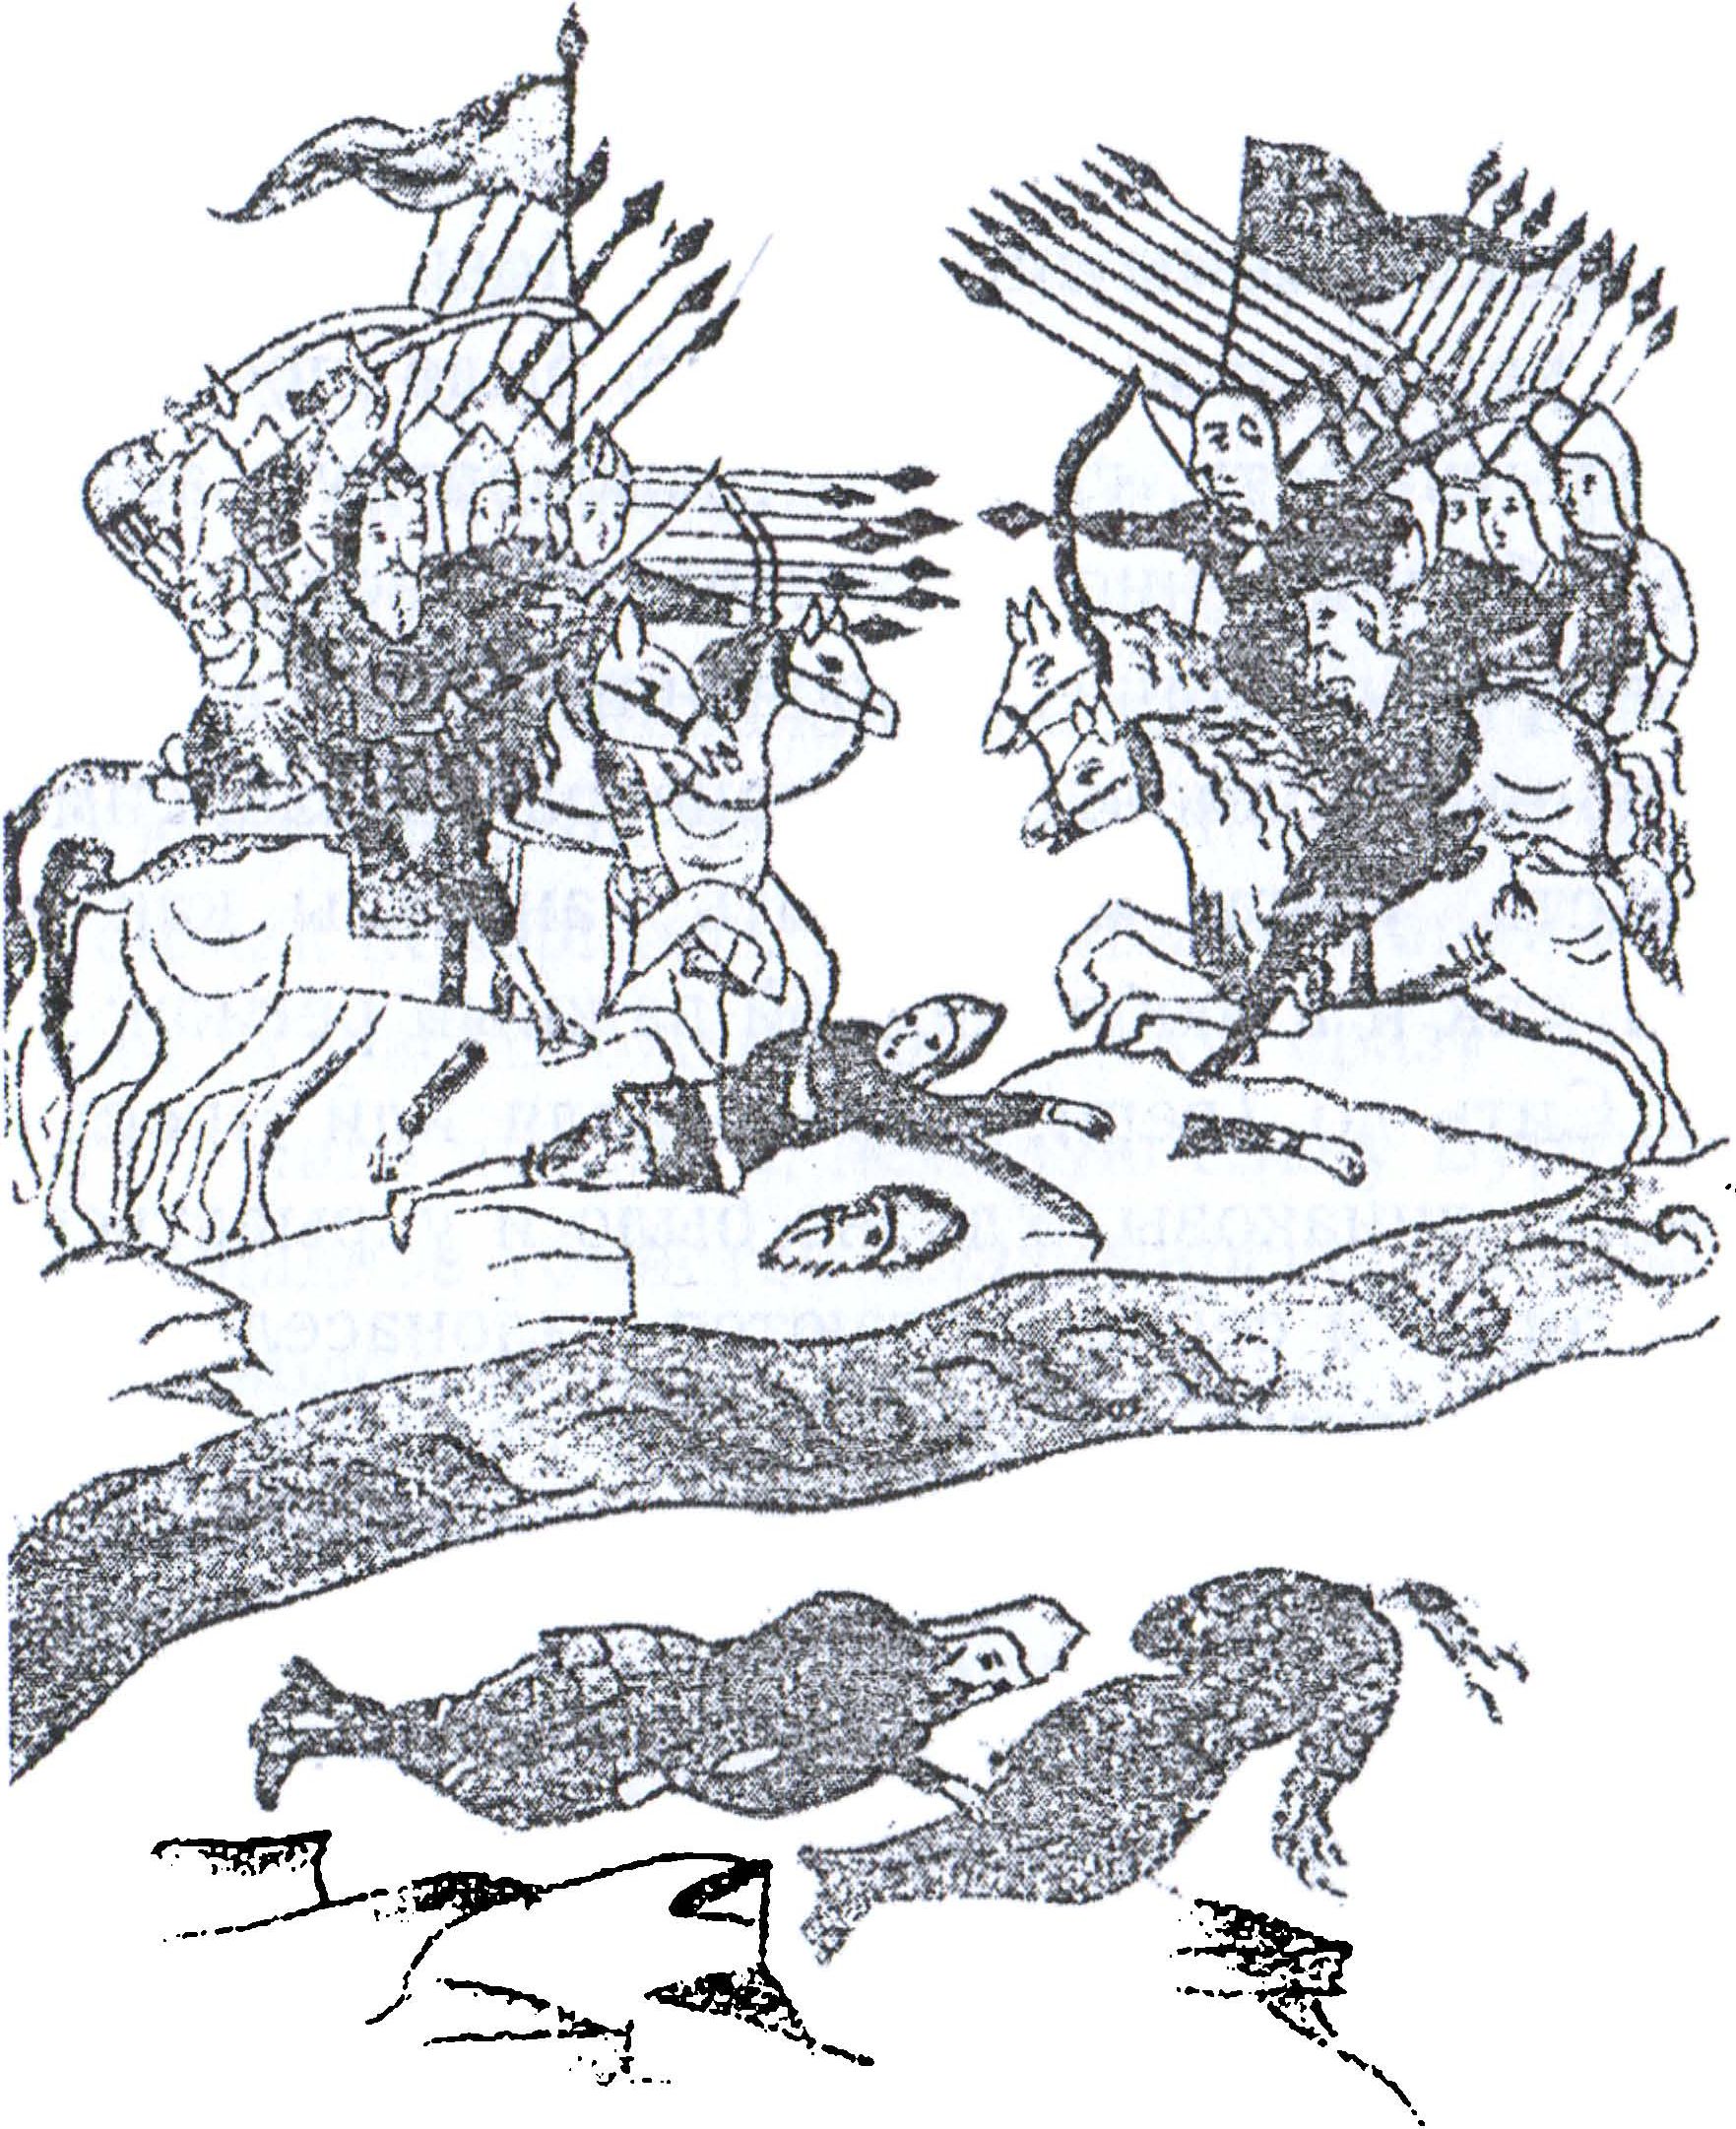 Битва на сити 1. 1238 Г. - битва на реке Сити. Битва на реке сить — 1238 г..